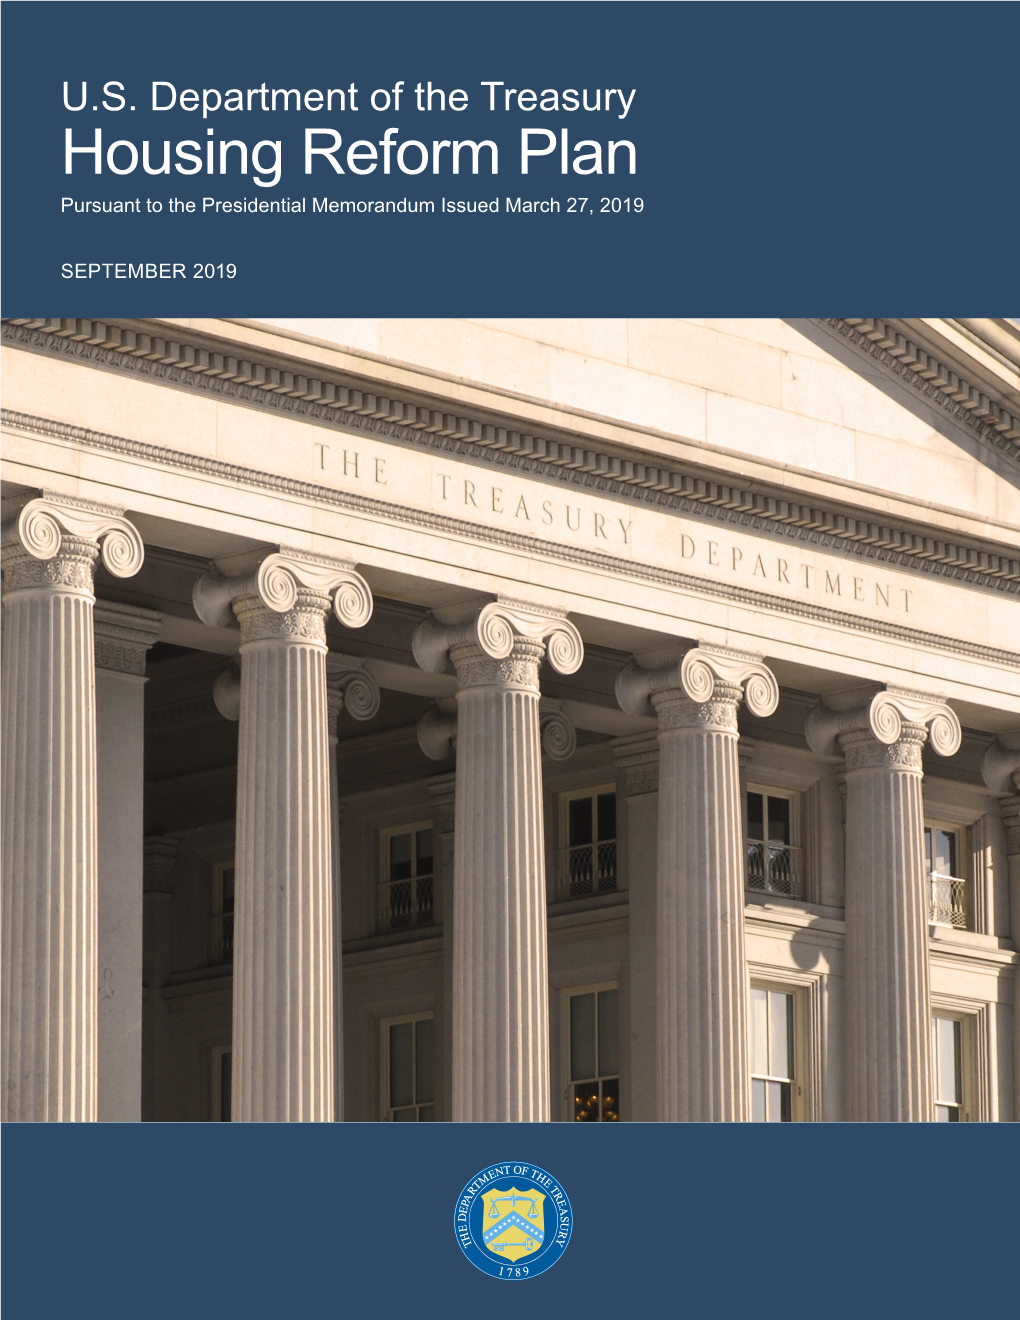 U.S. Department of Treasury Housing Reform Plan